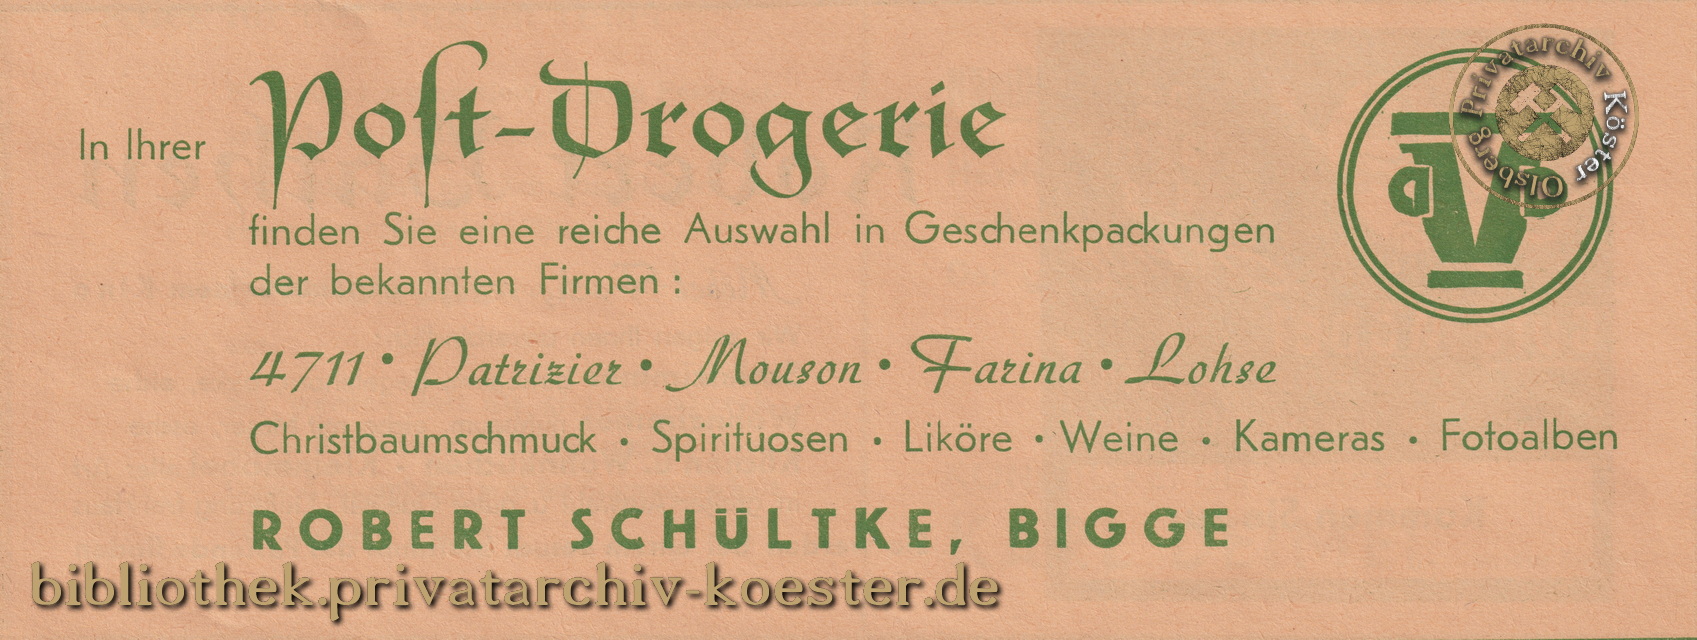 Werbeanzeige Post-Drogerie Bigge 1956